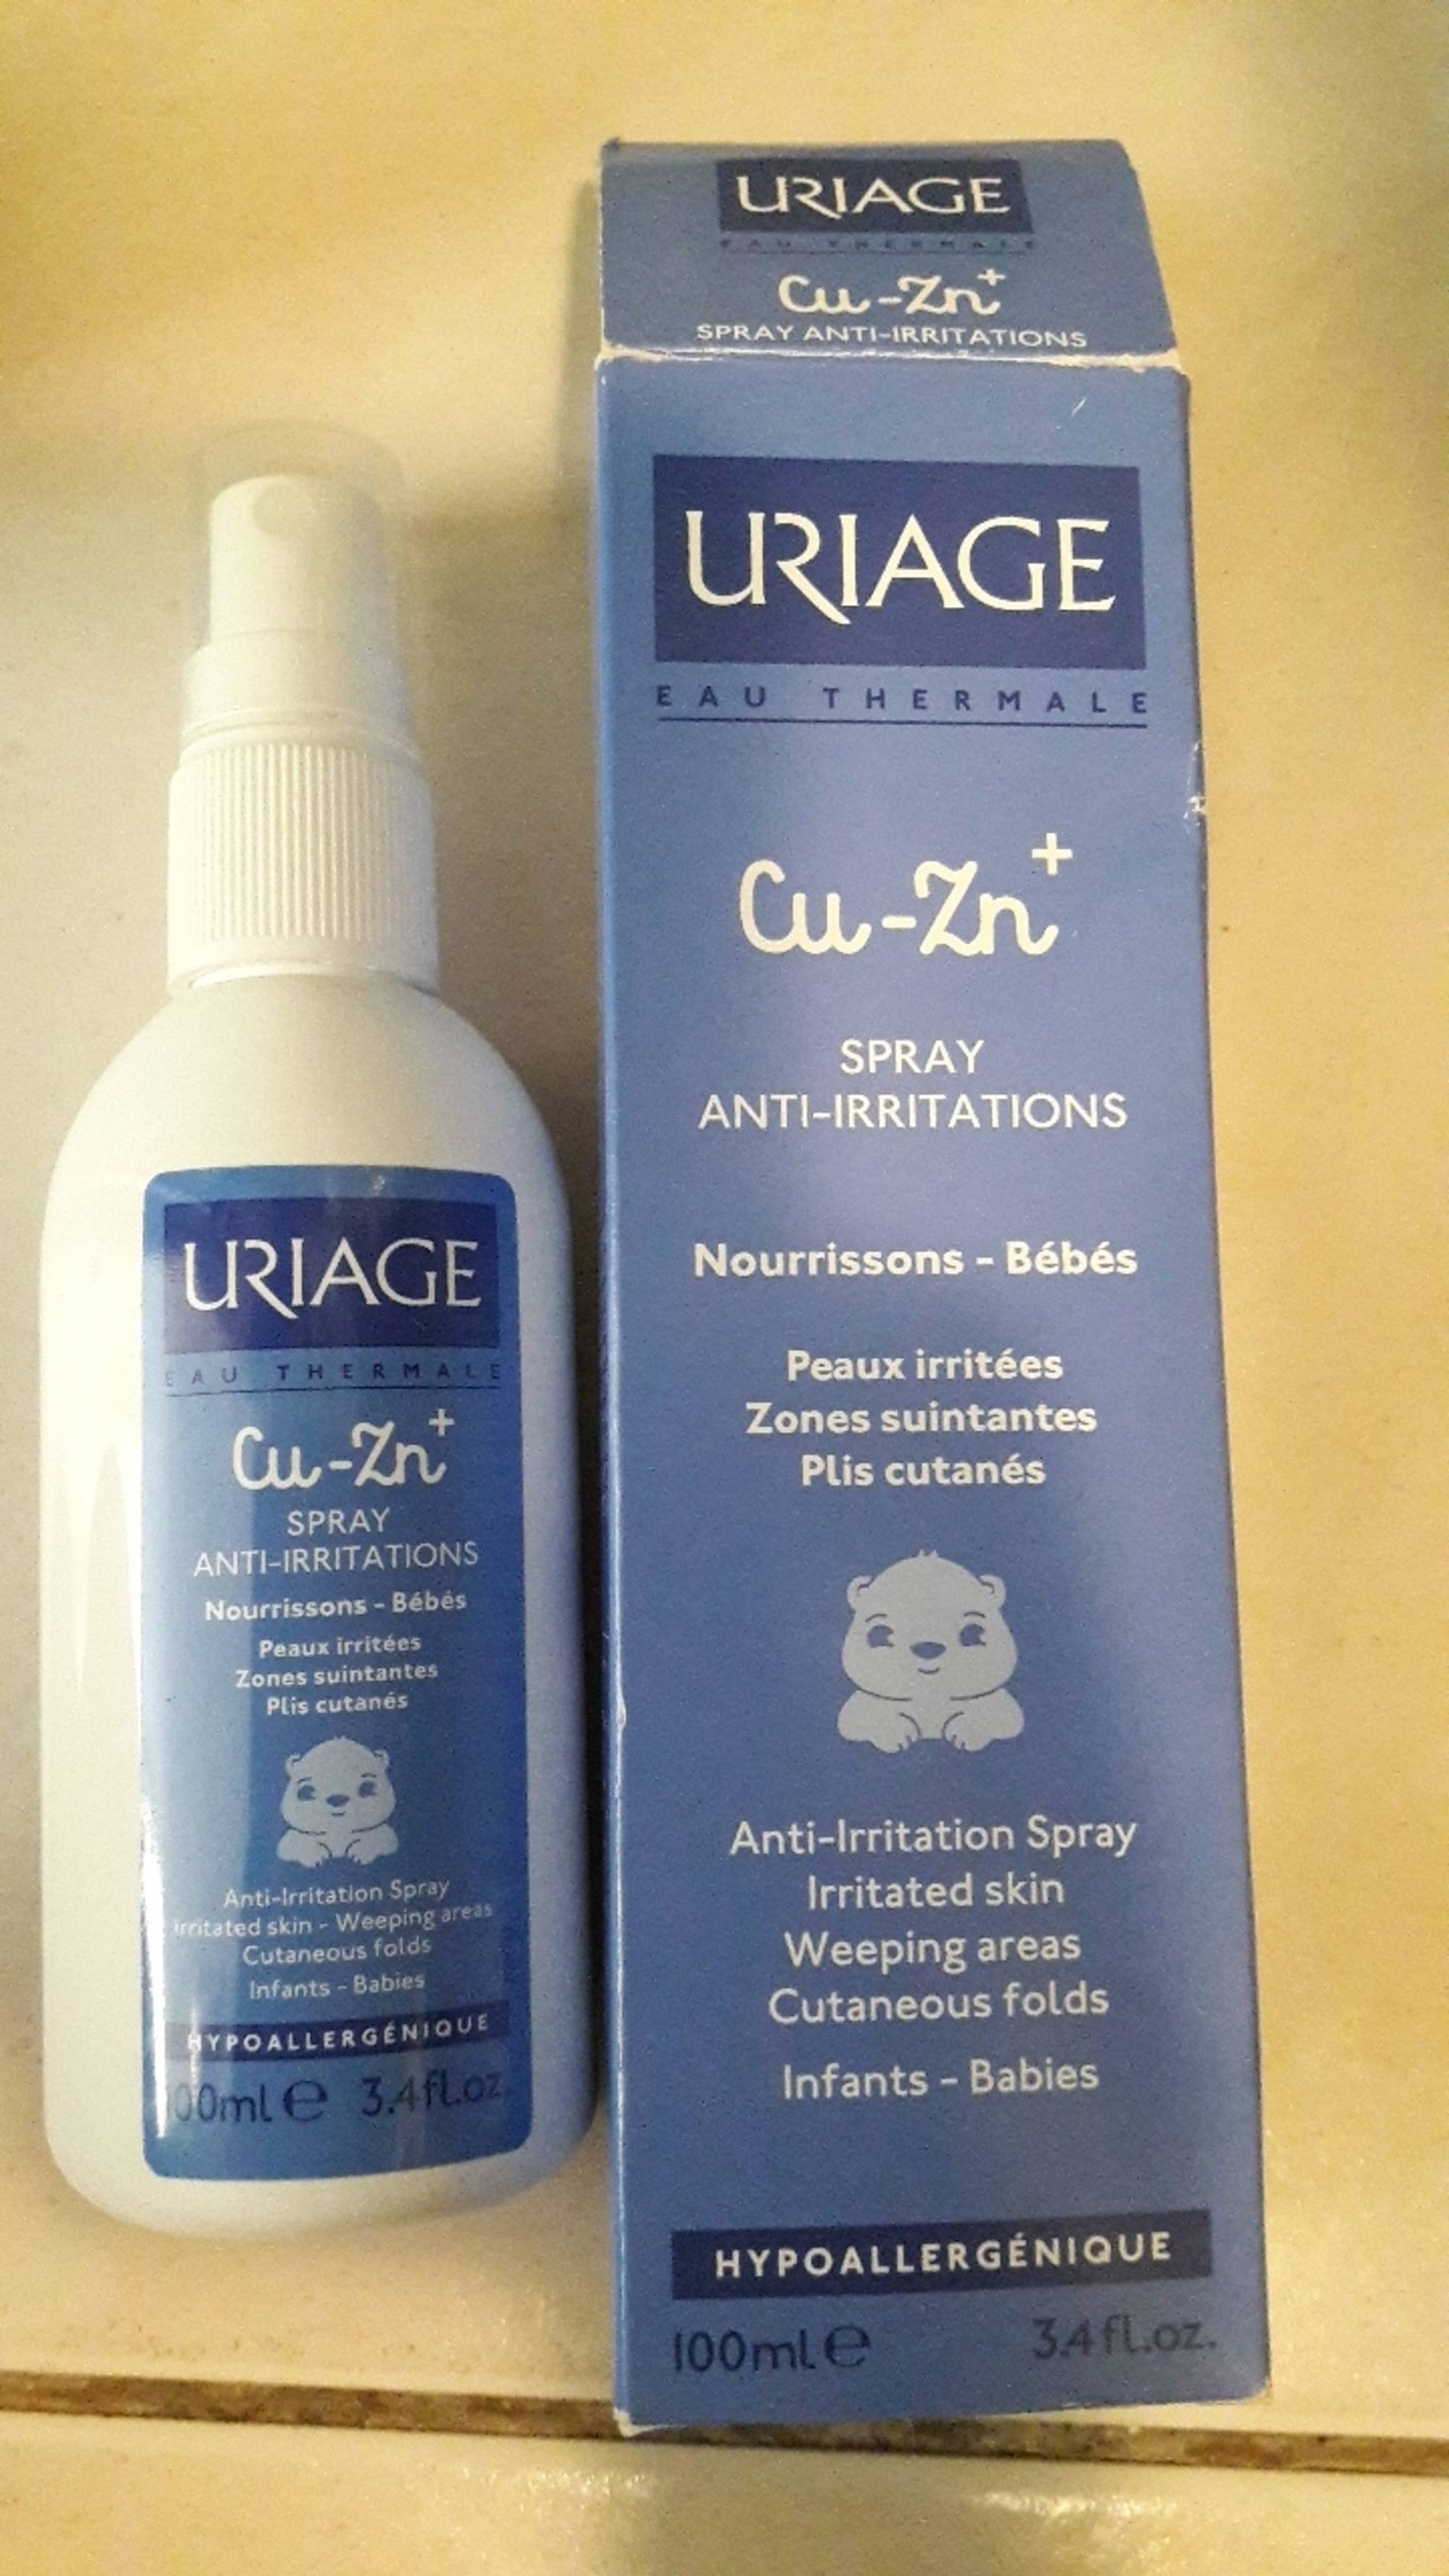 URIAGE - Cu-Zn+ - Spray anti-irritations